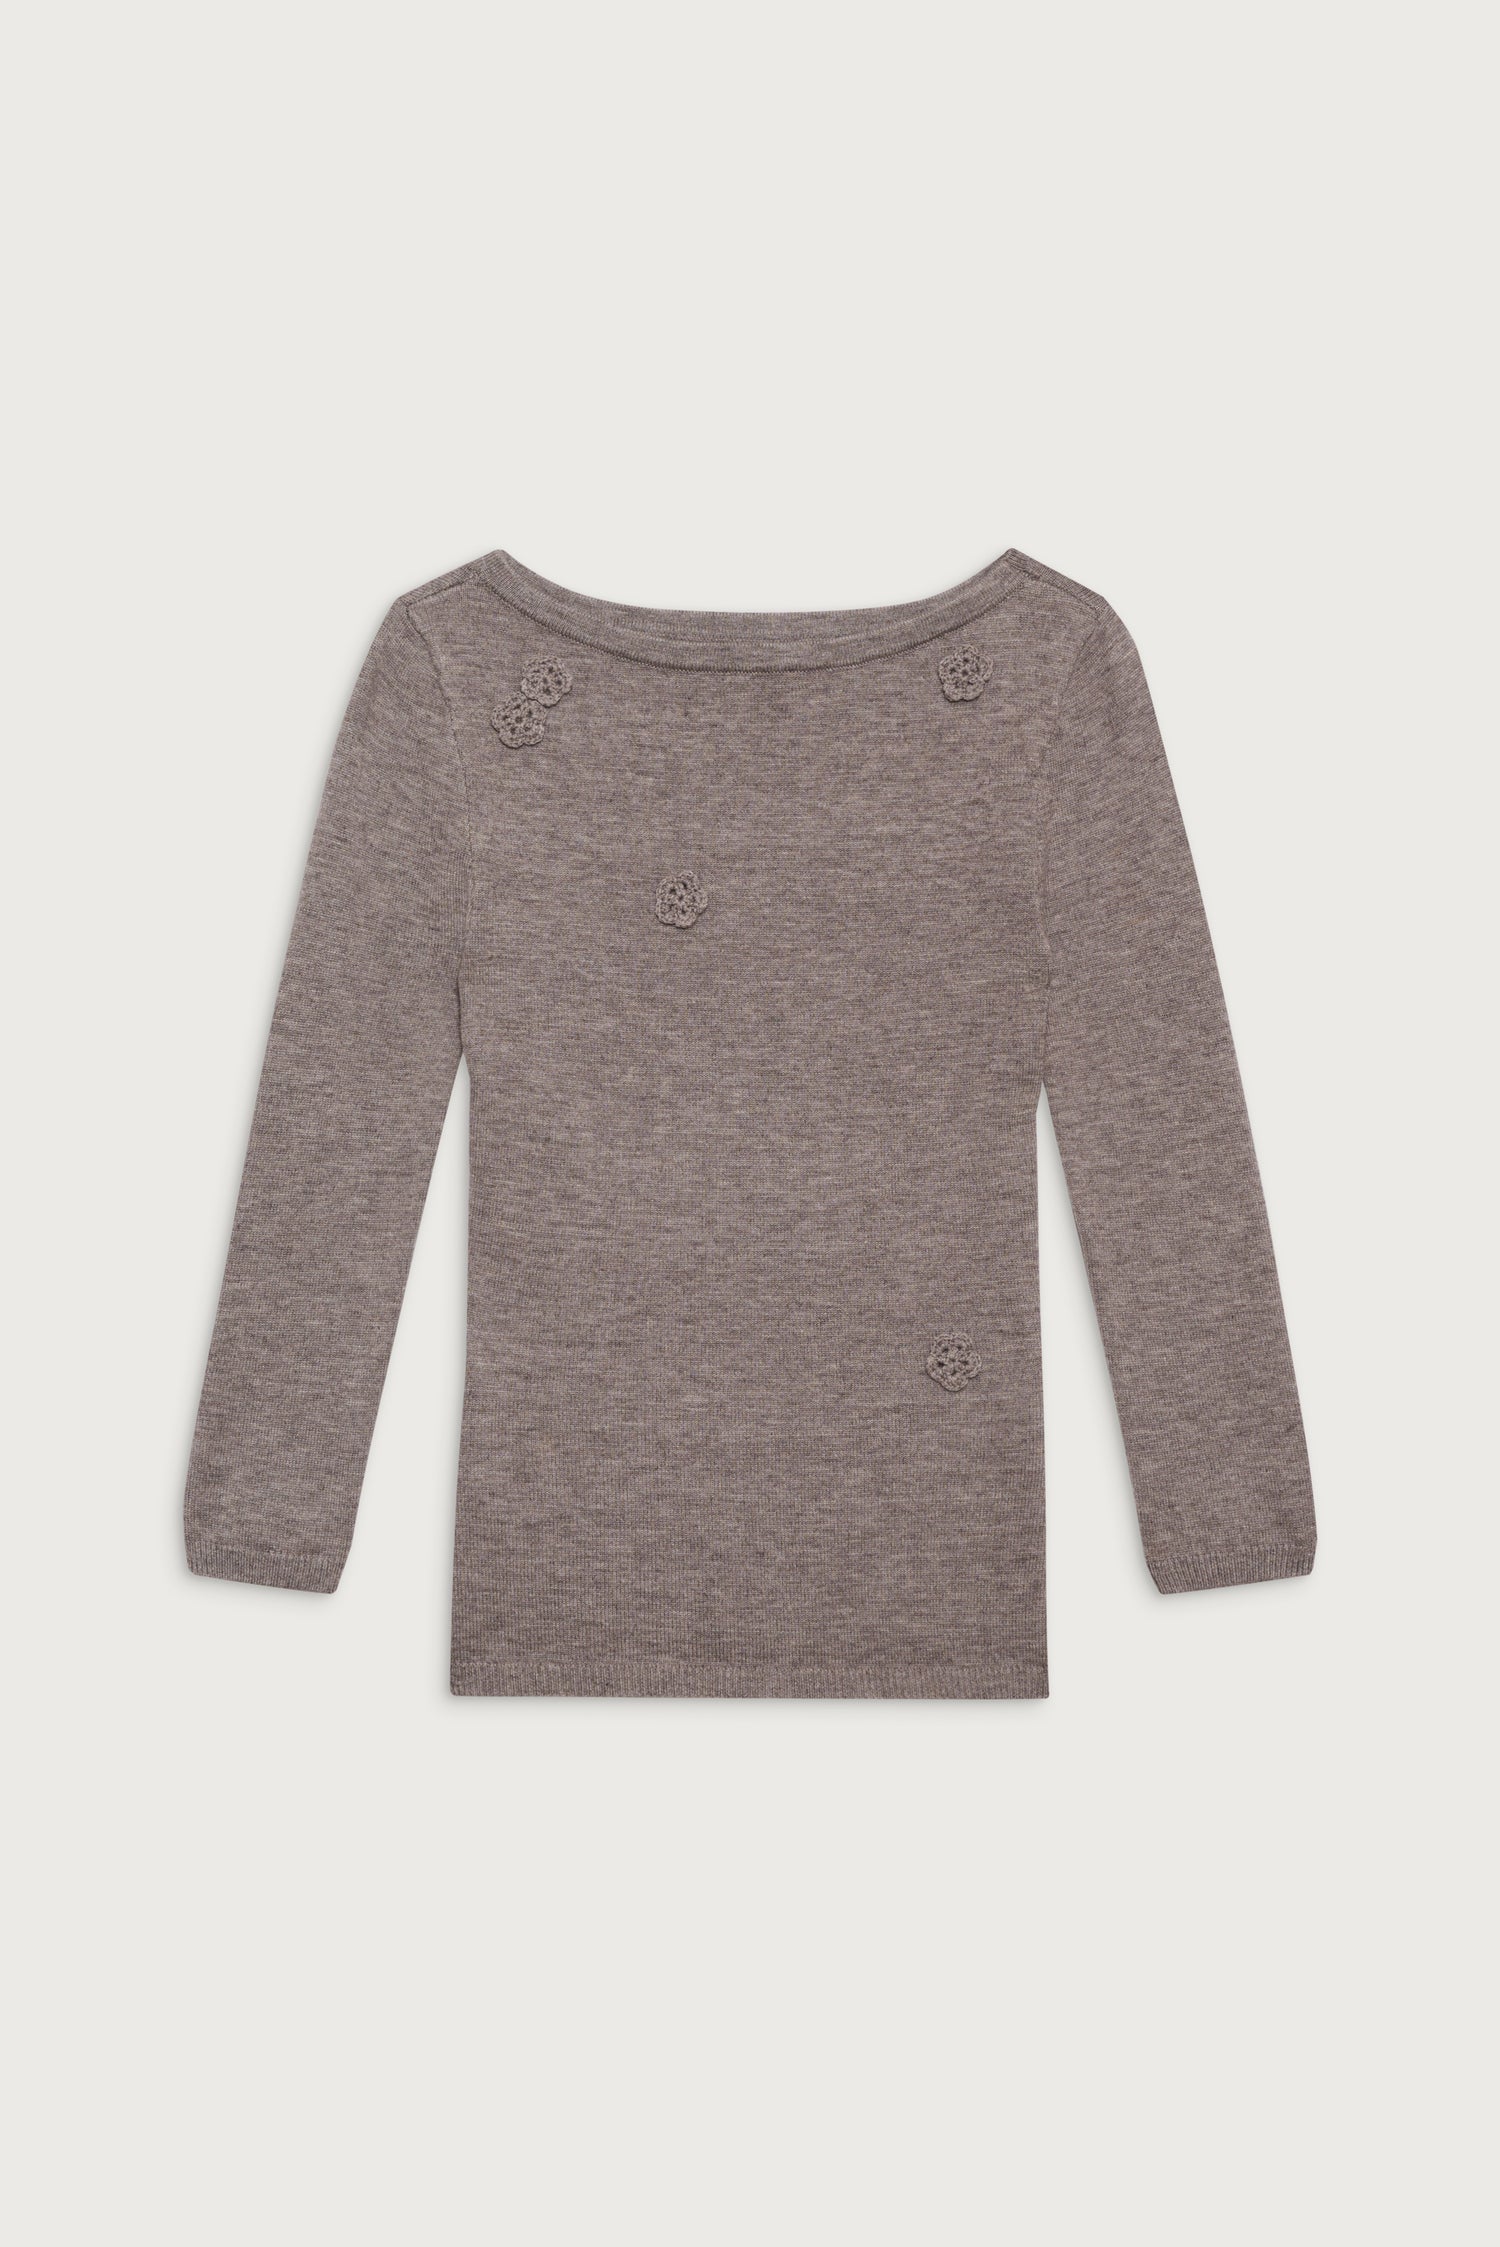 Providence Cloud Knit Sweater - Dark Pearl